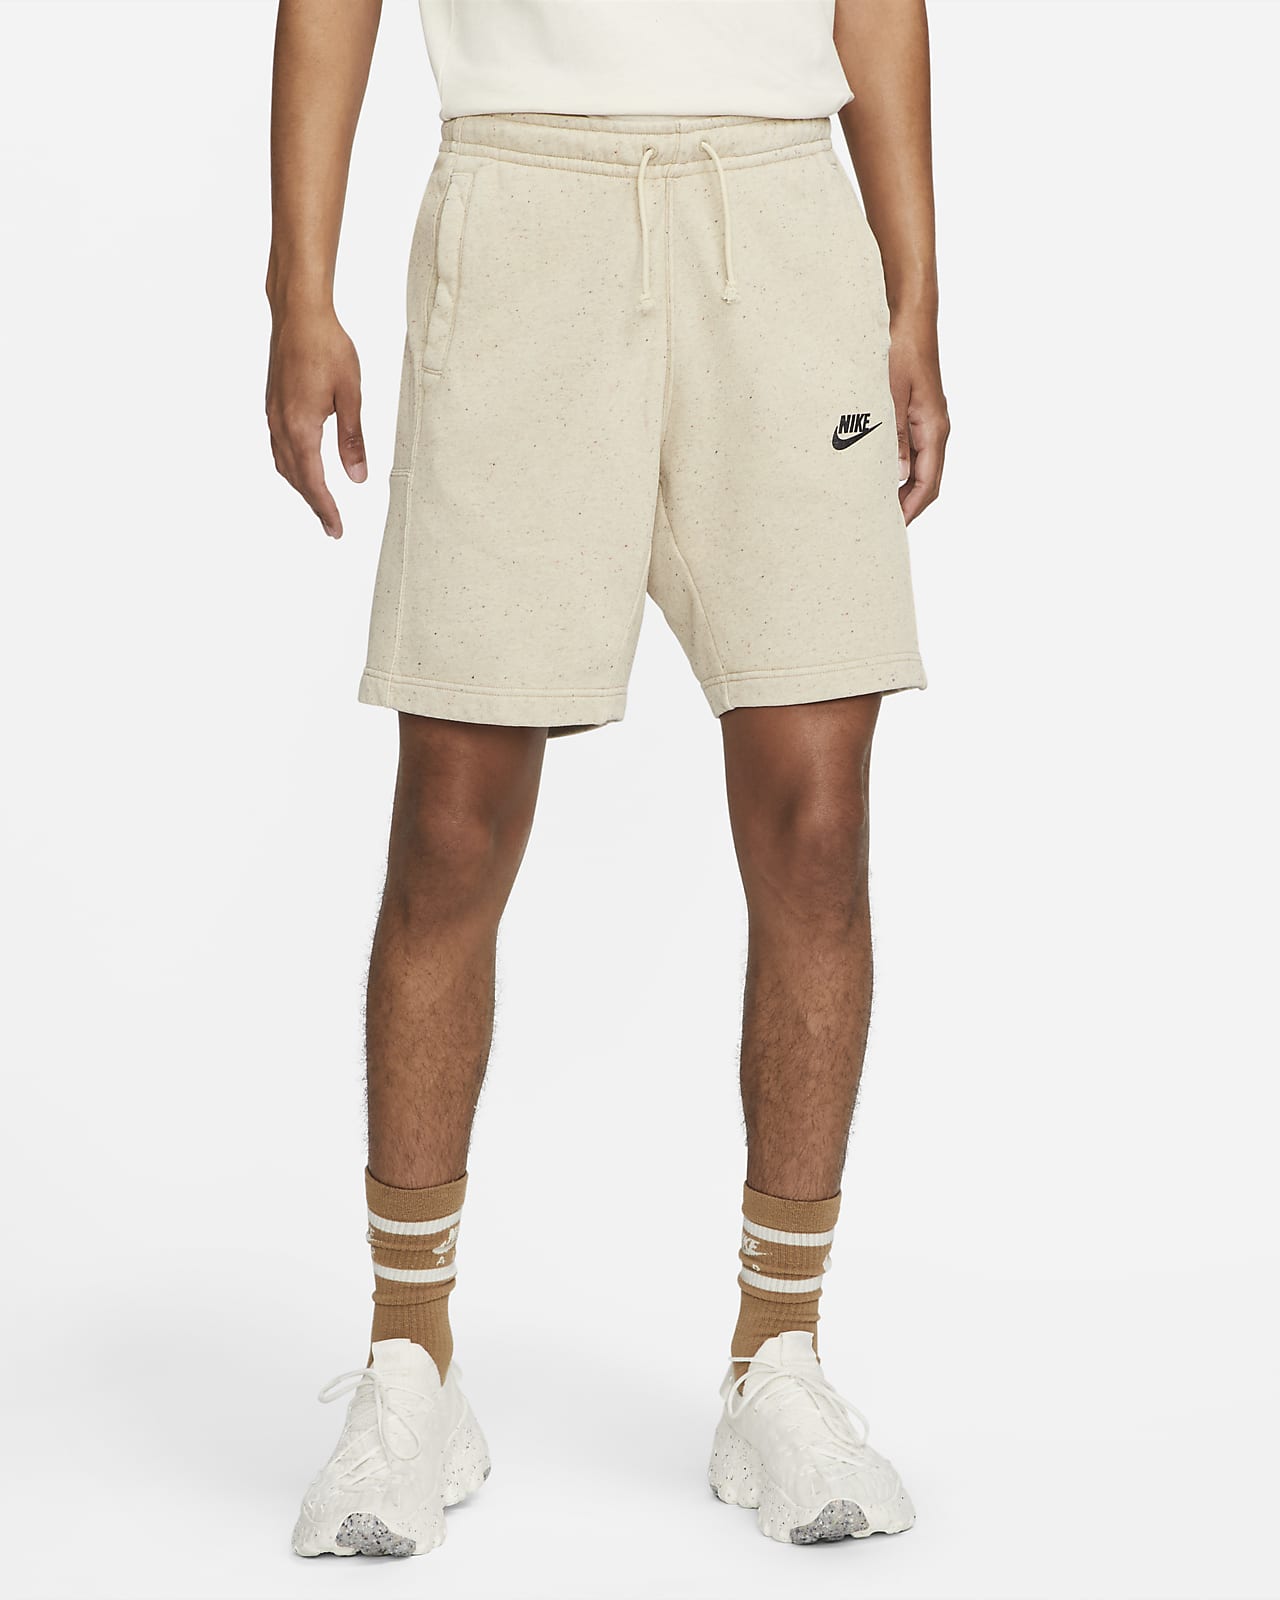 Club Fleece+ Men's Shorts. Nike